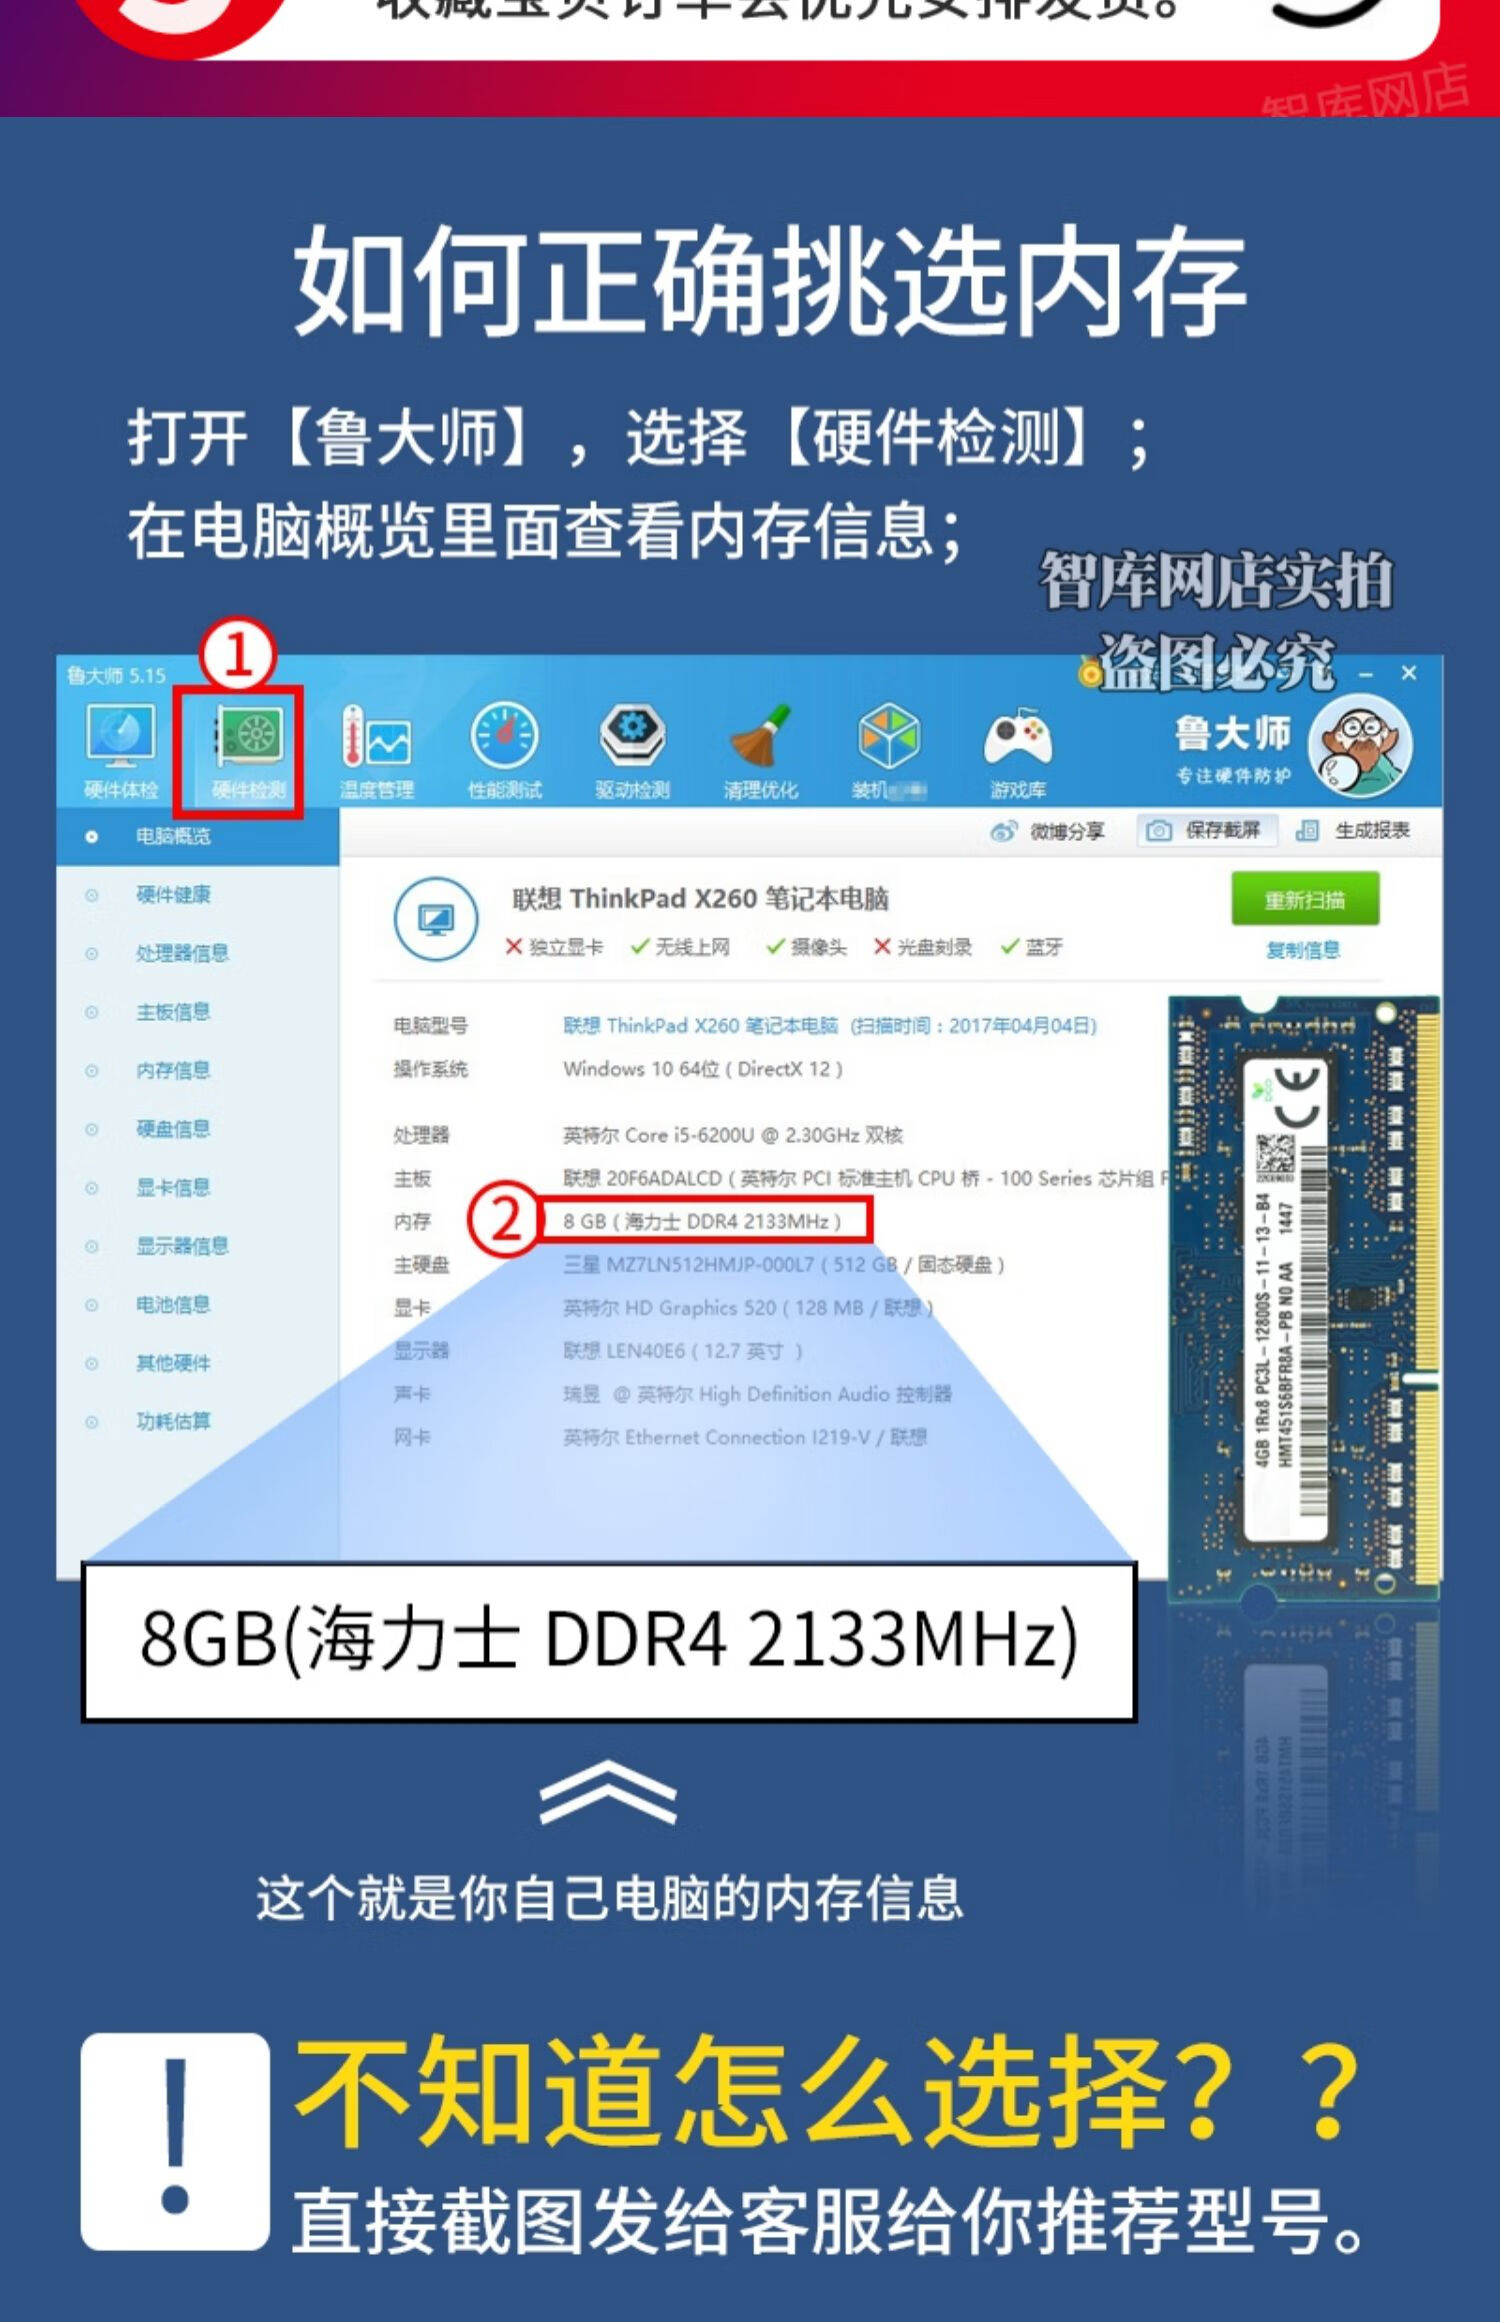 DDR4内存选择指南：深度解析DDR4-2133MHz与DDR4-2400MHz，助你明智选购笔记本内存  第1张